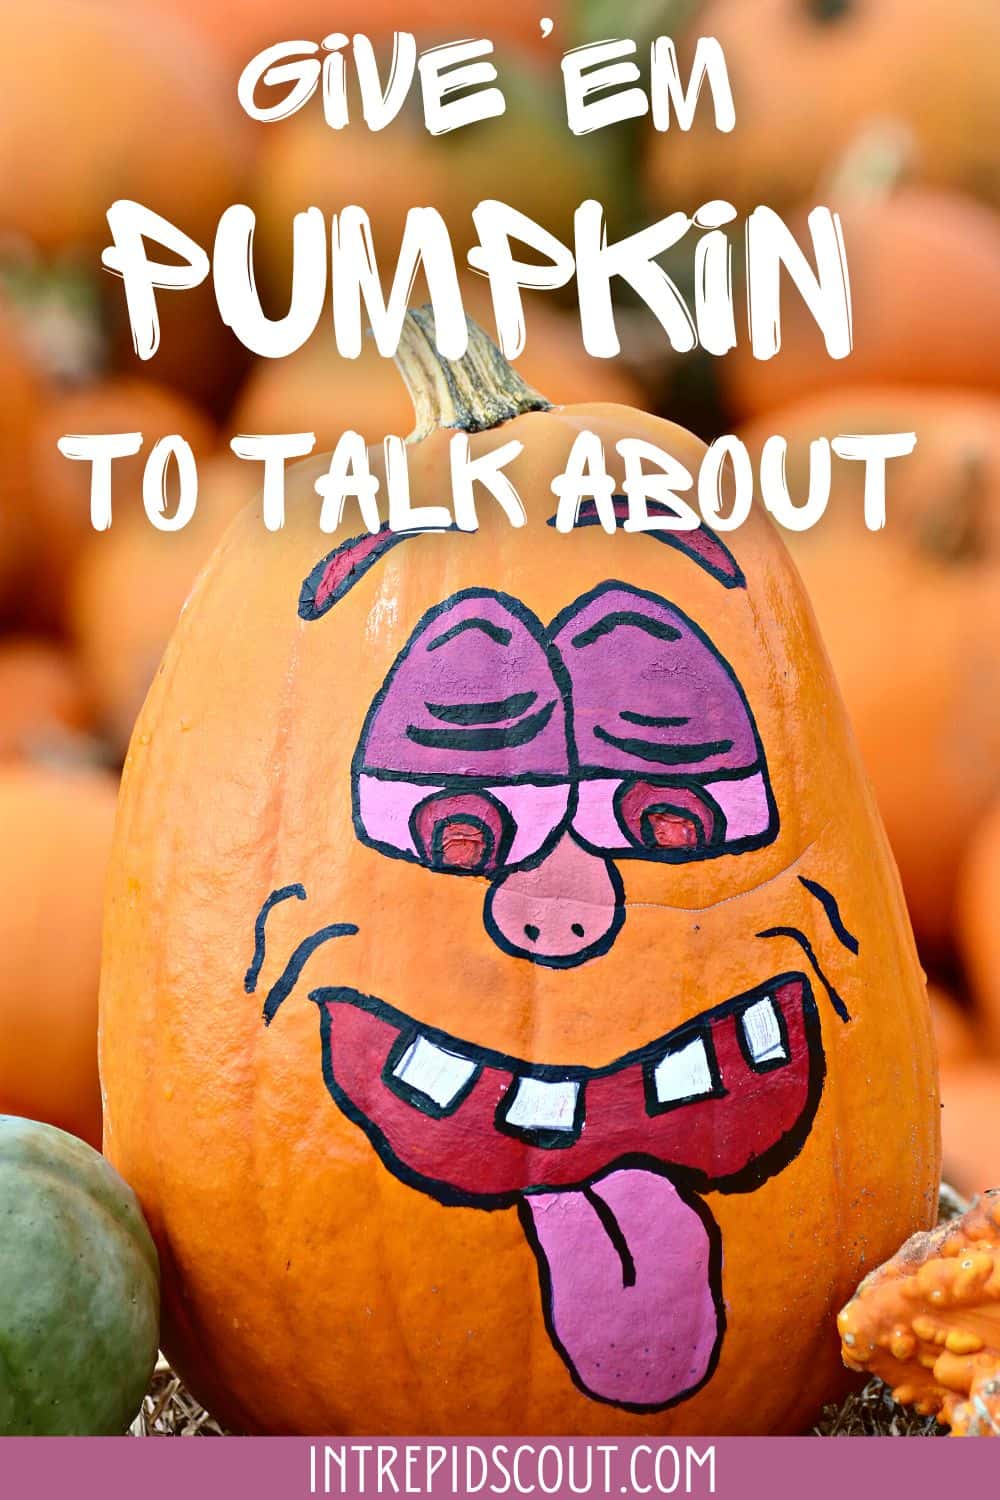 Jack-o'-lantern Pumpkin Captions and Quotes